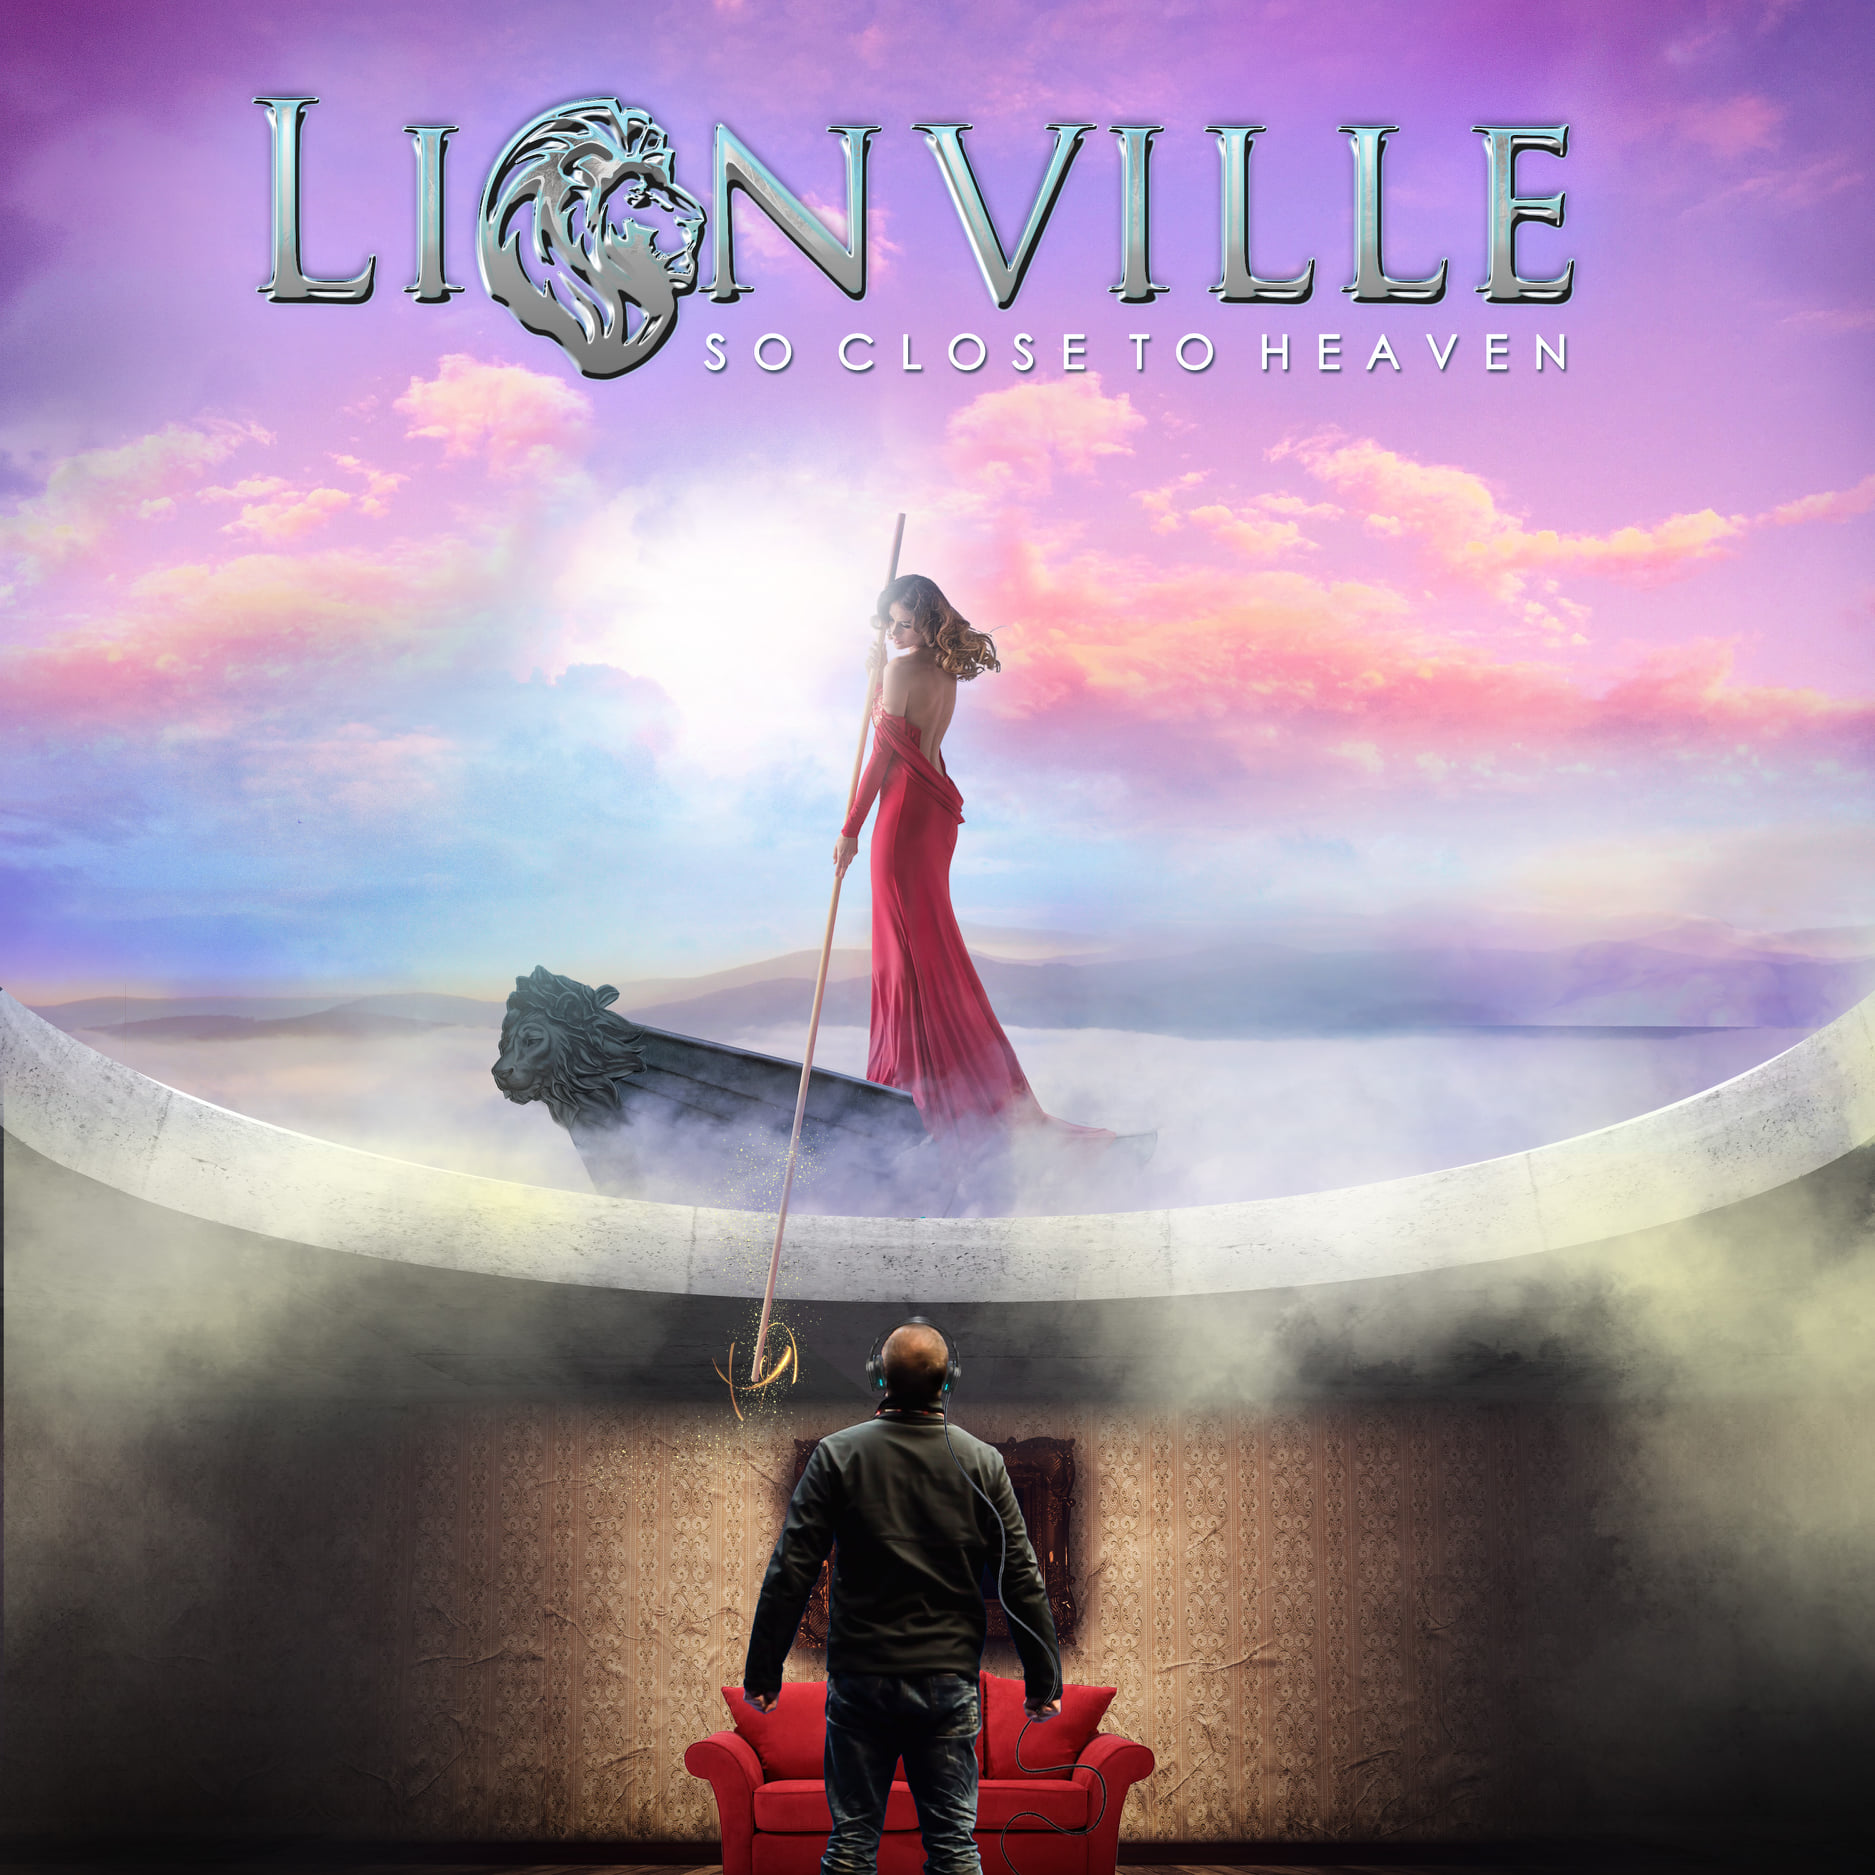 Lionville – "So Close to Heaven"